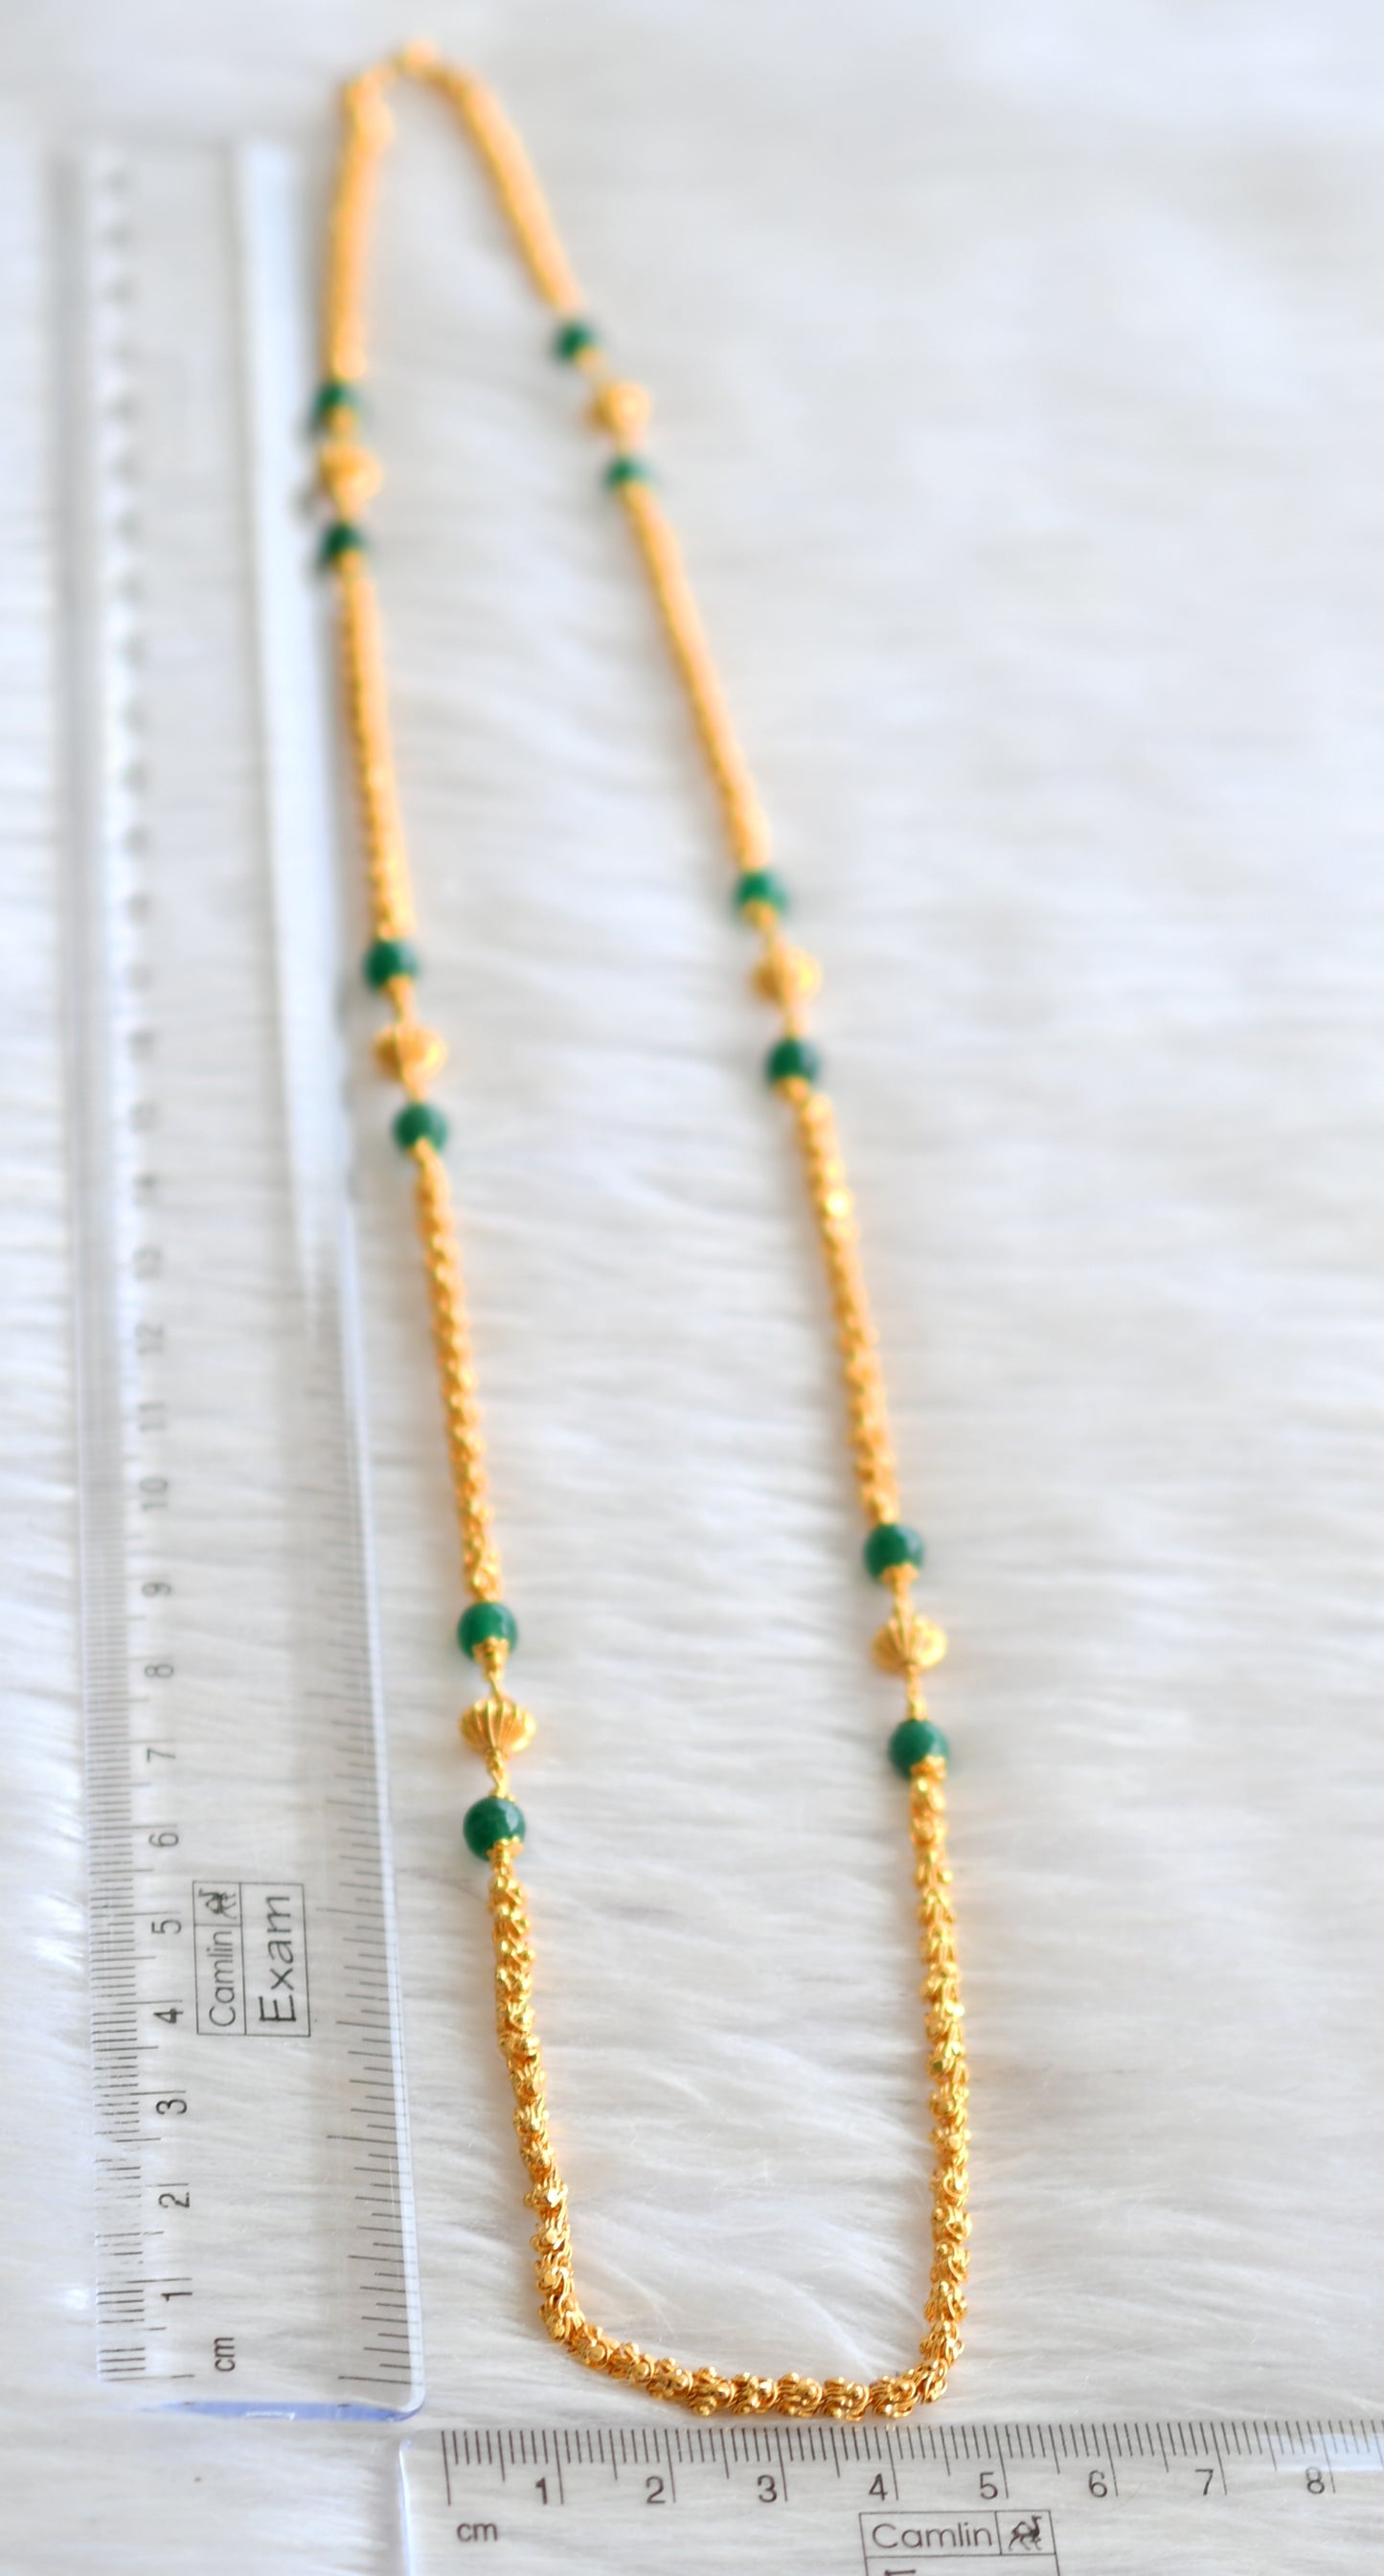 Gold tone 24 inches  green bead chain dj-43433